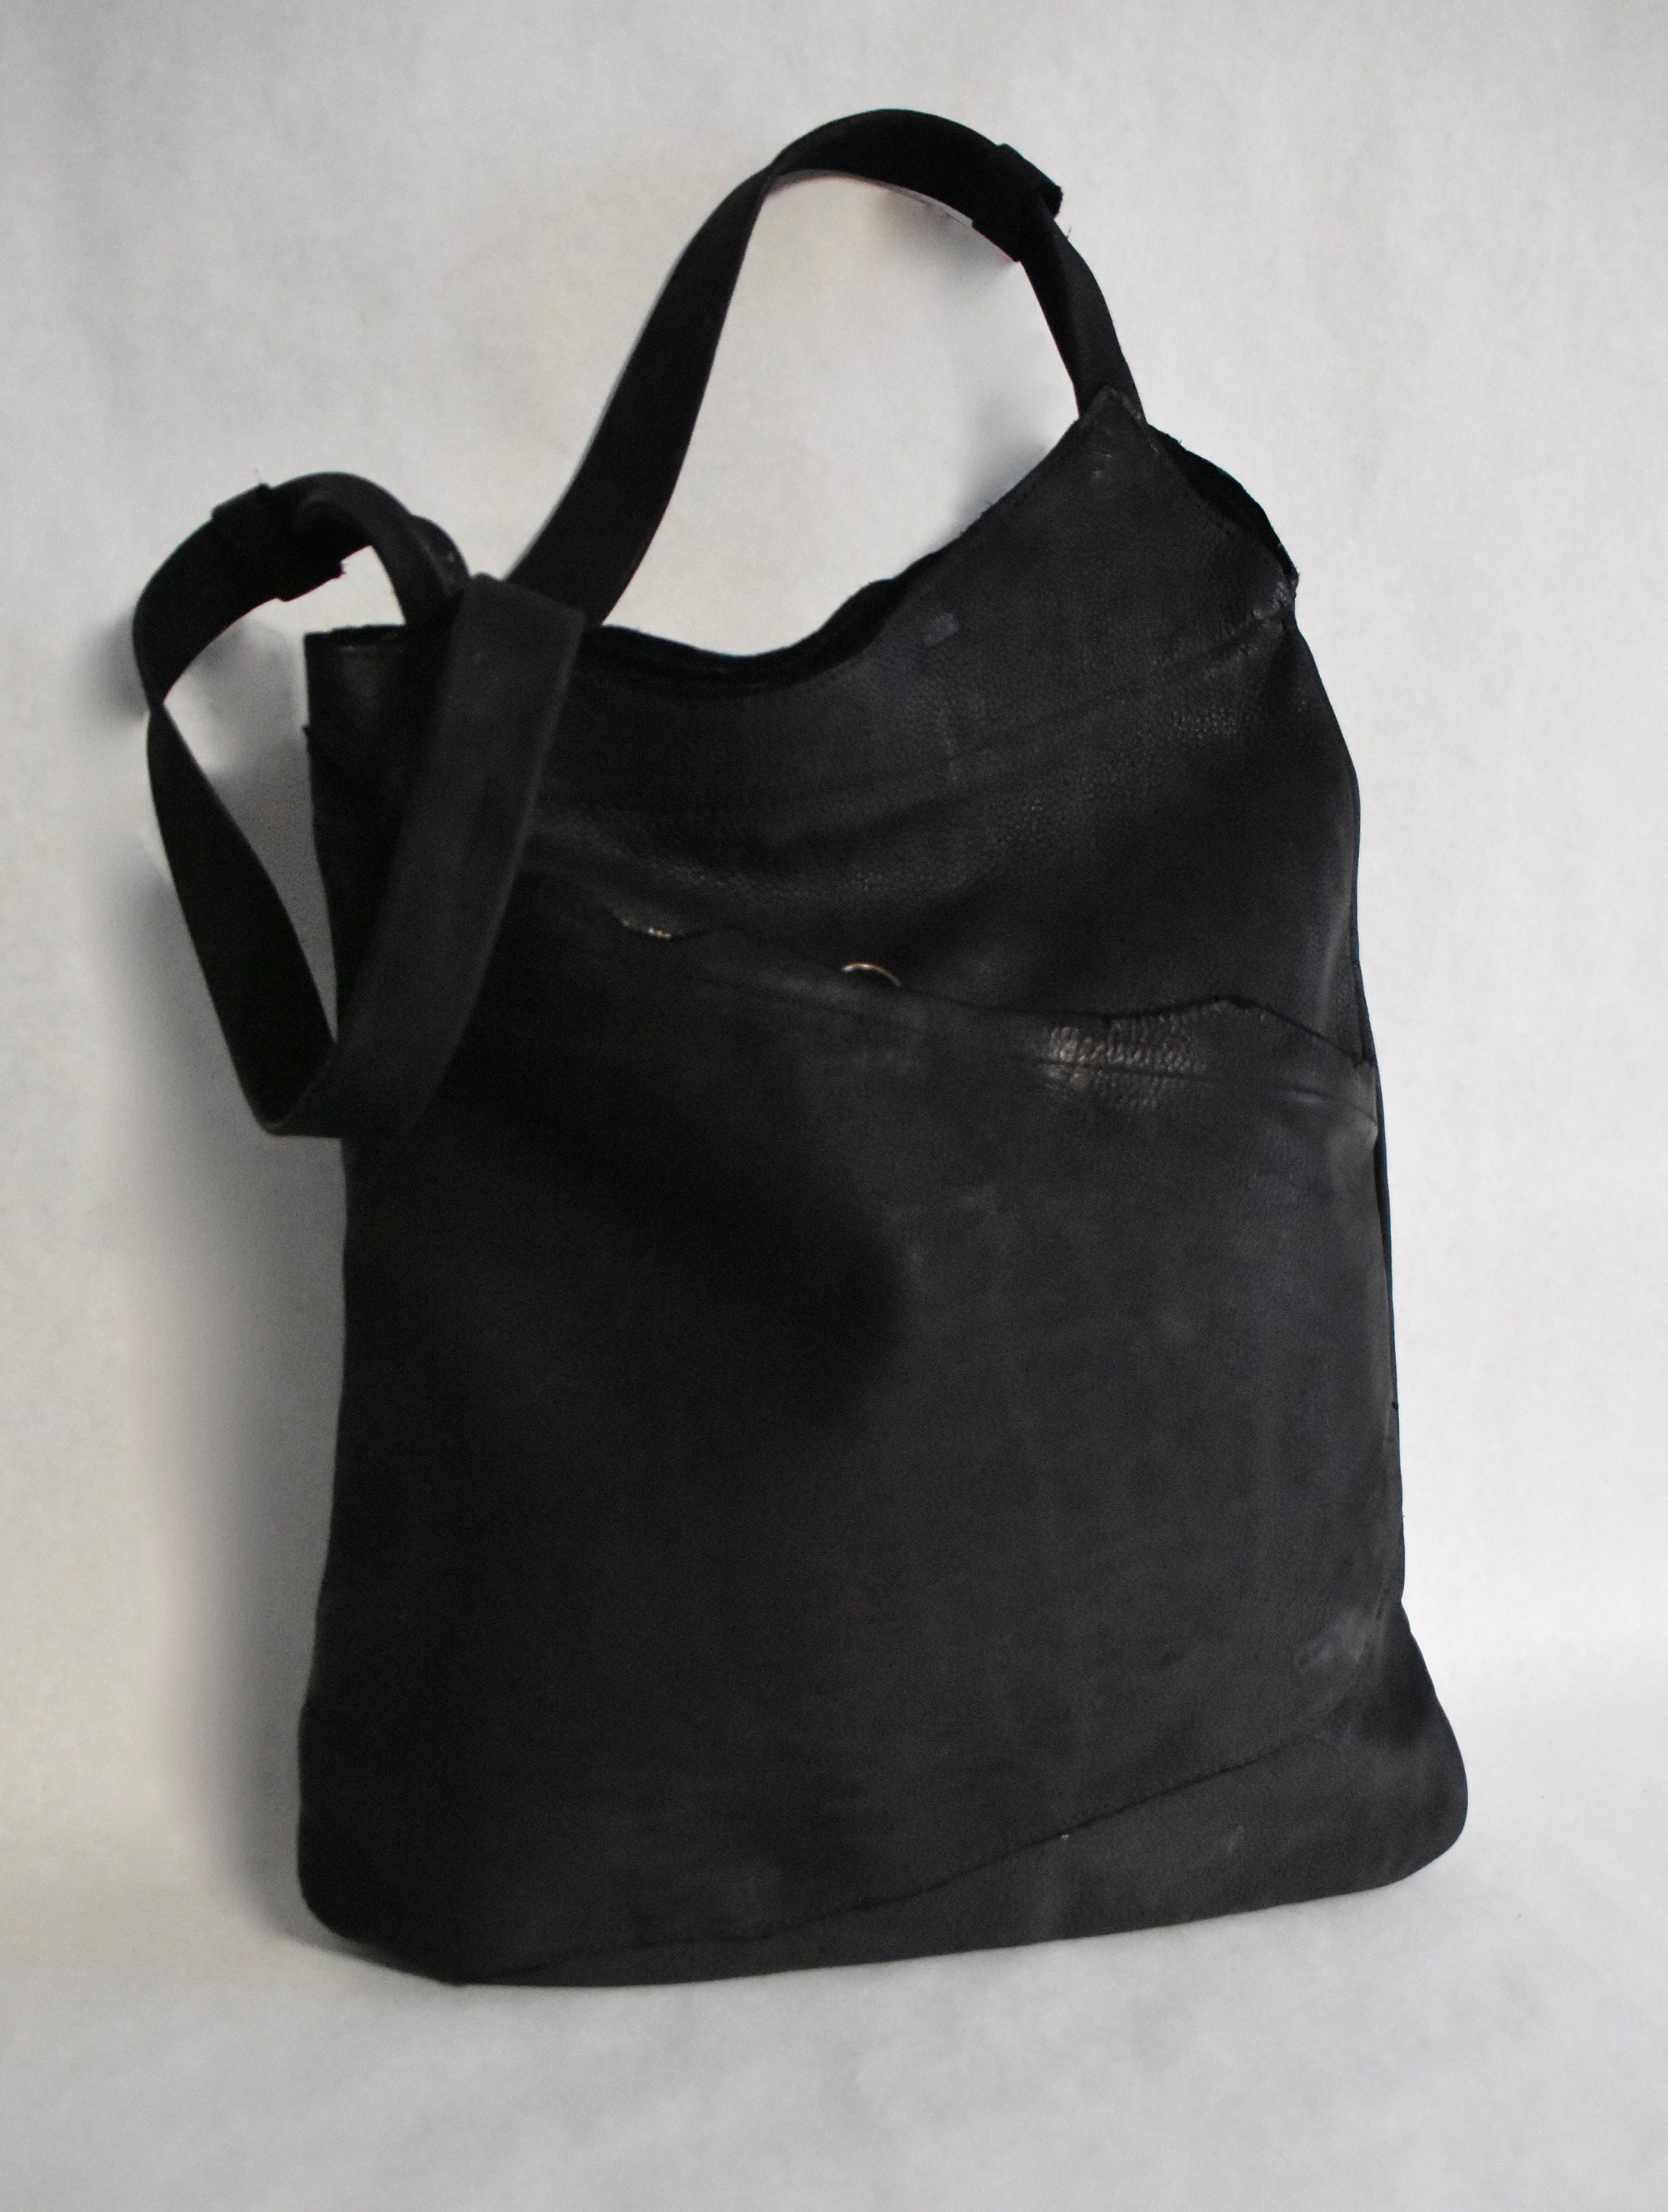 LUNA JAZE Poney X Bag No. 104 Black Italian Leather - Etsy